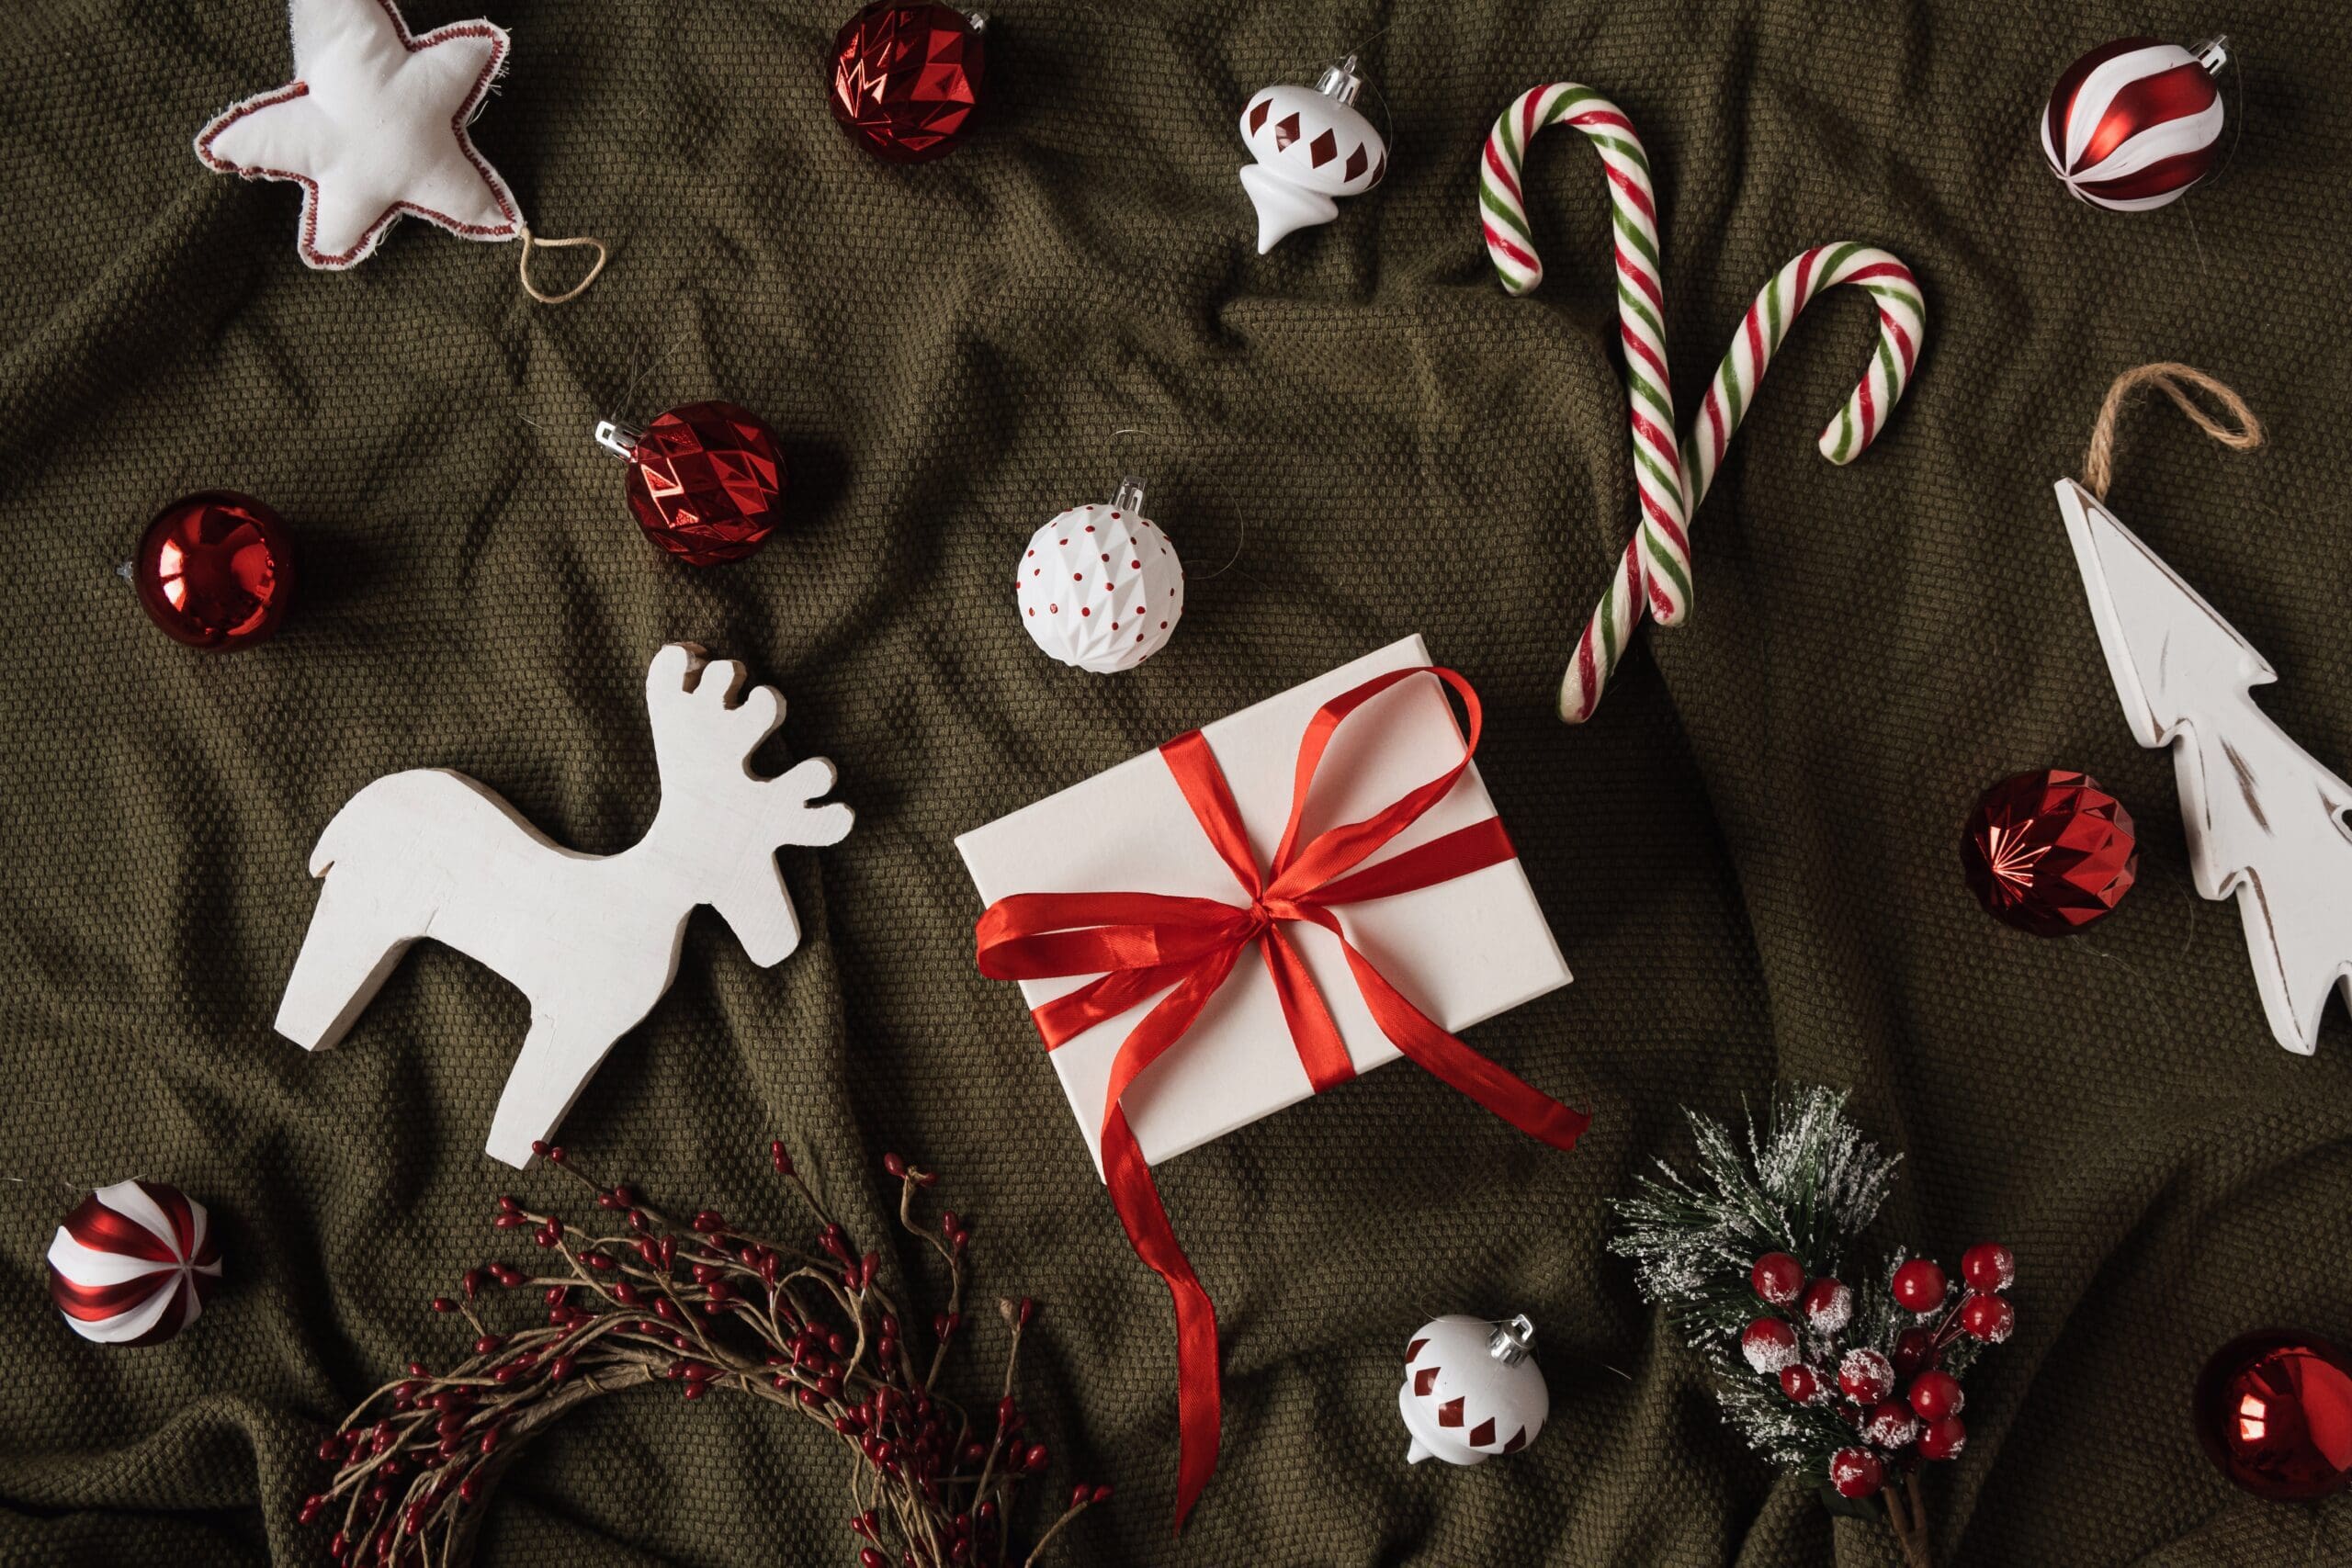 Creative Christmas Marketing Ideas – December 25th